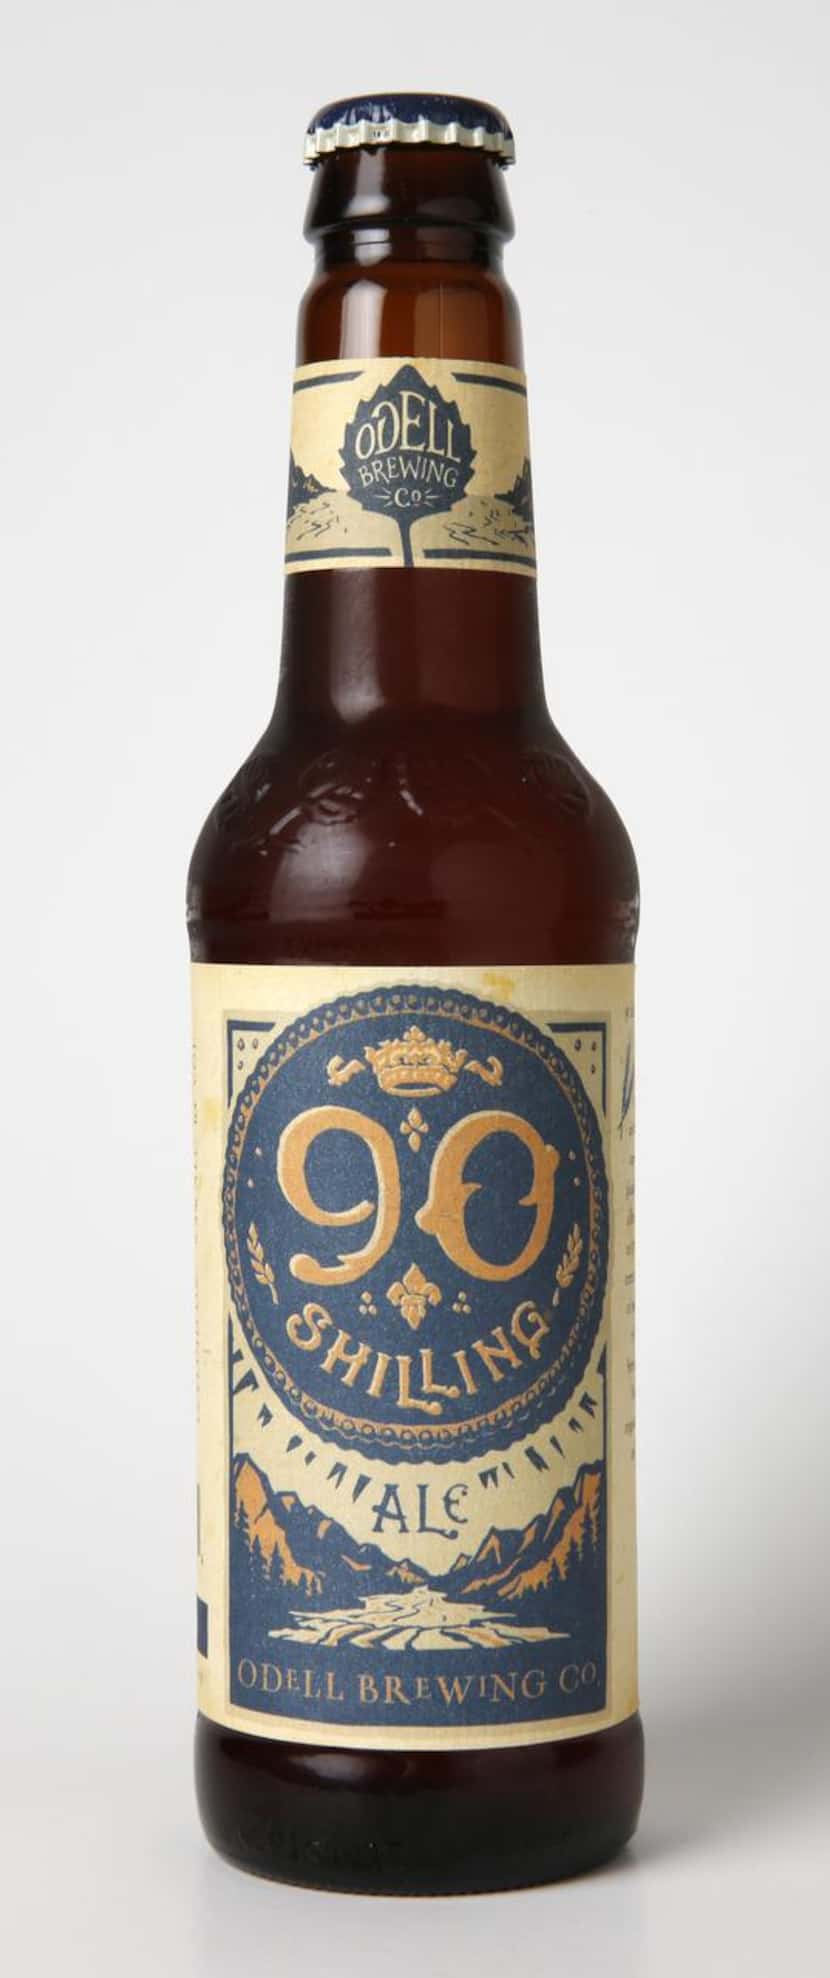 
90 Shilling Ale, Odell Brewing Co., Colorado
